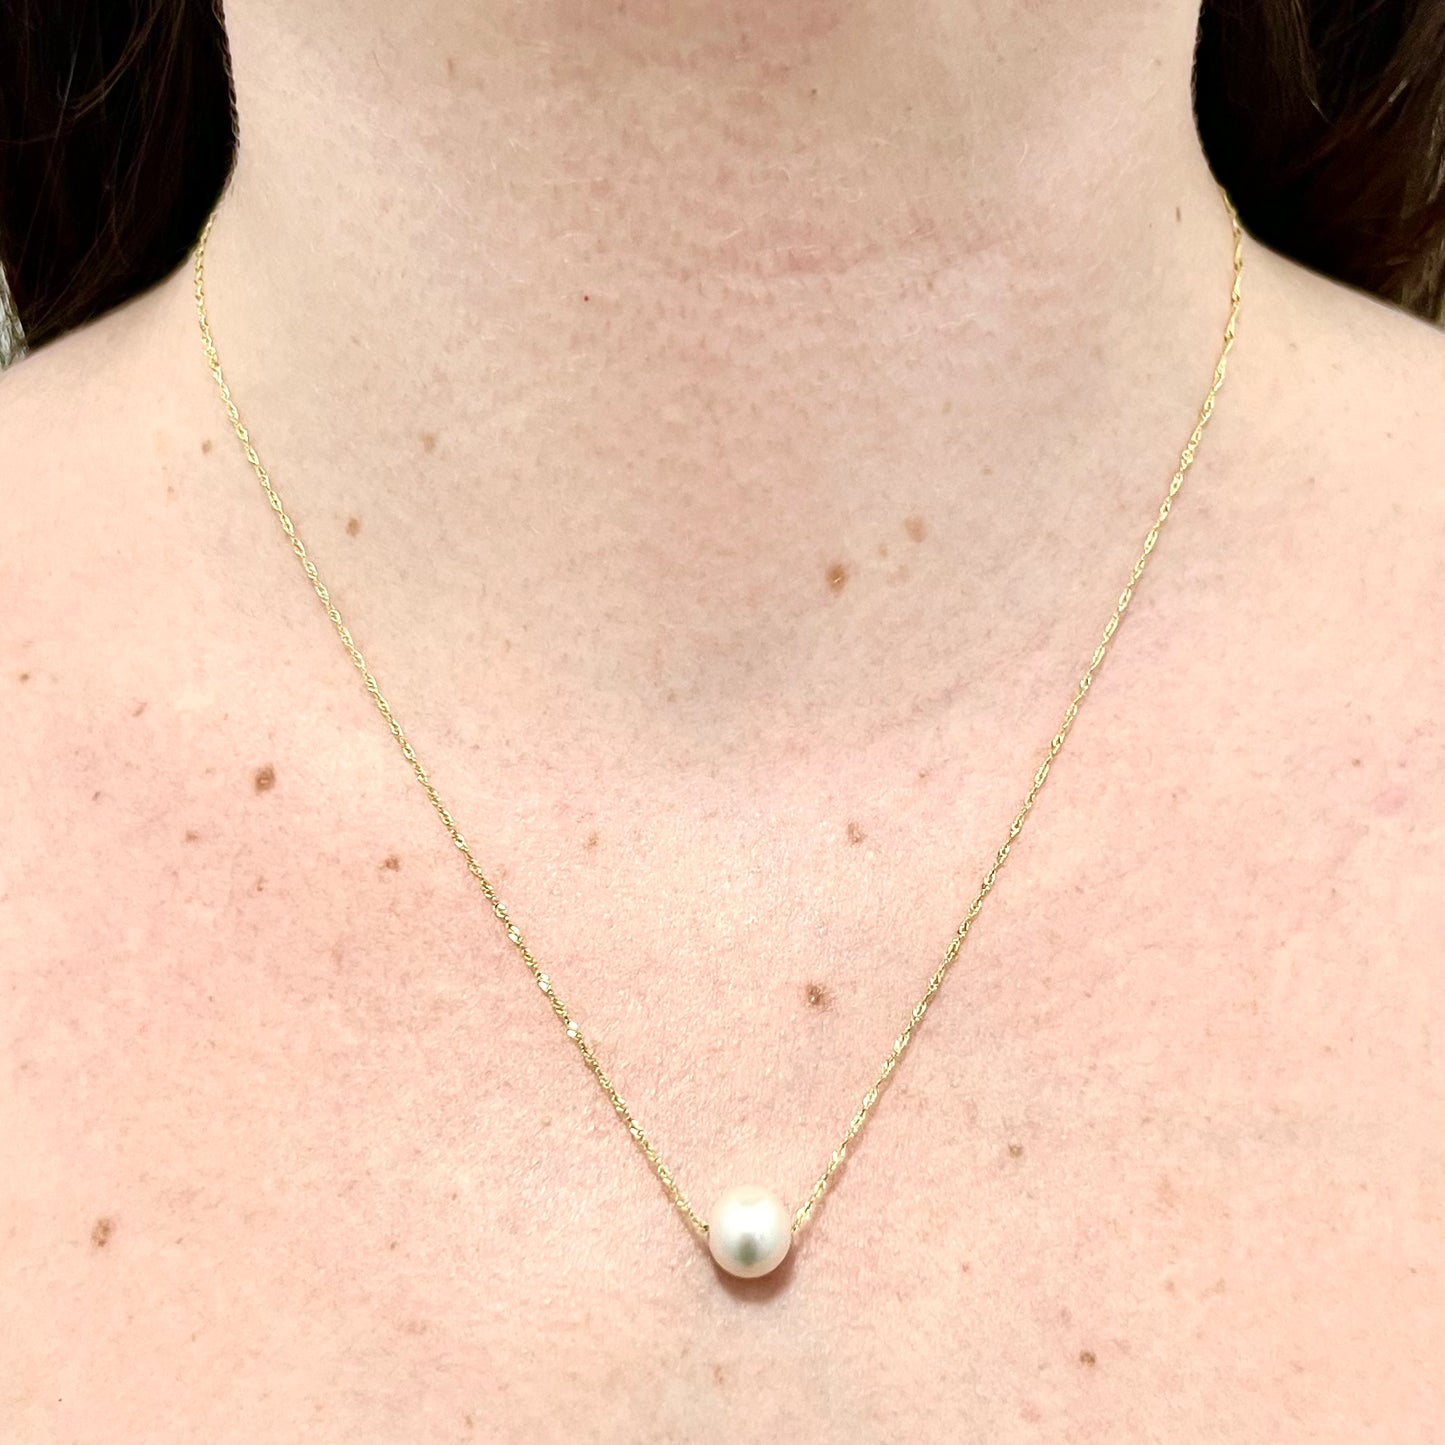 14 Karat White Gold Single White Pearl Pendant Necklace